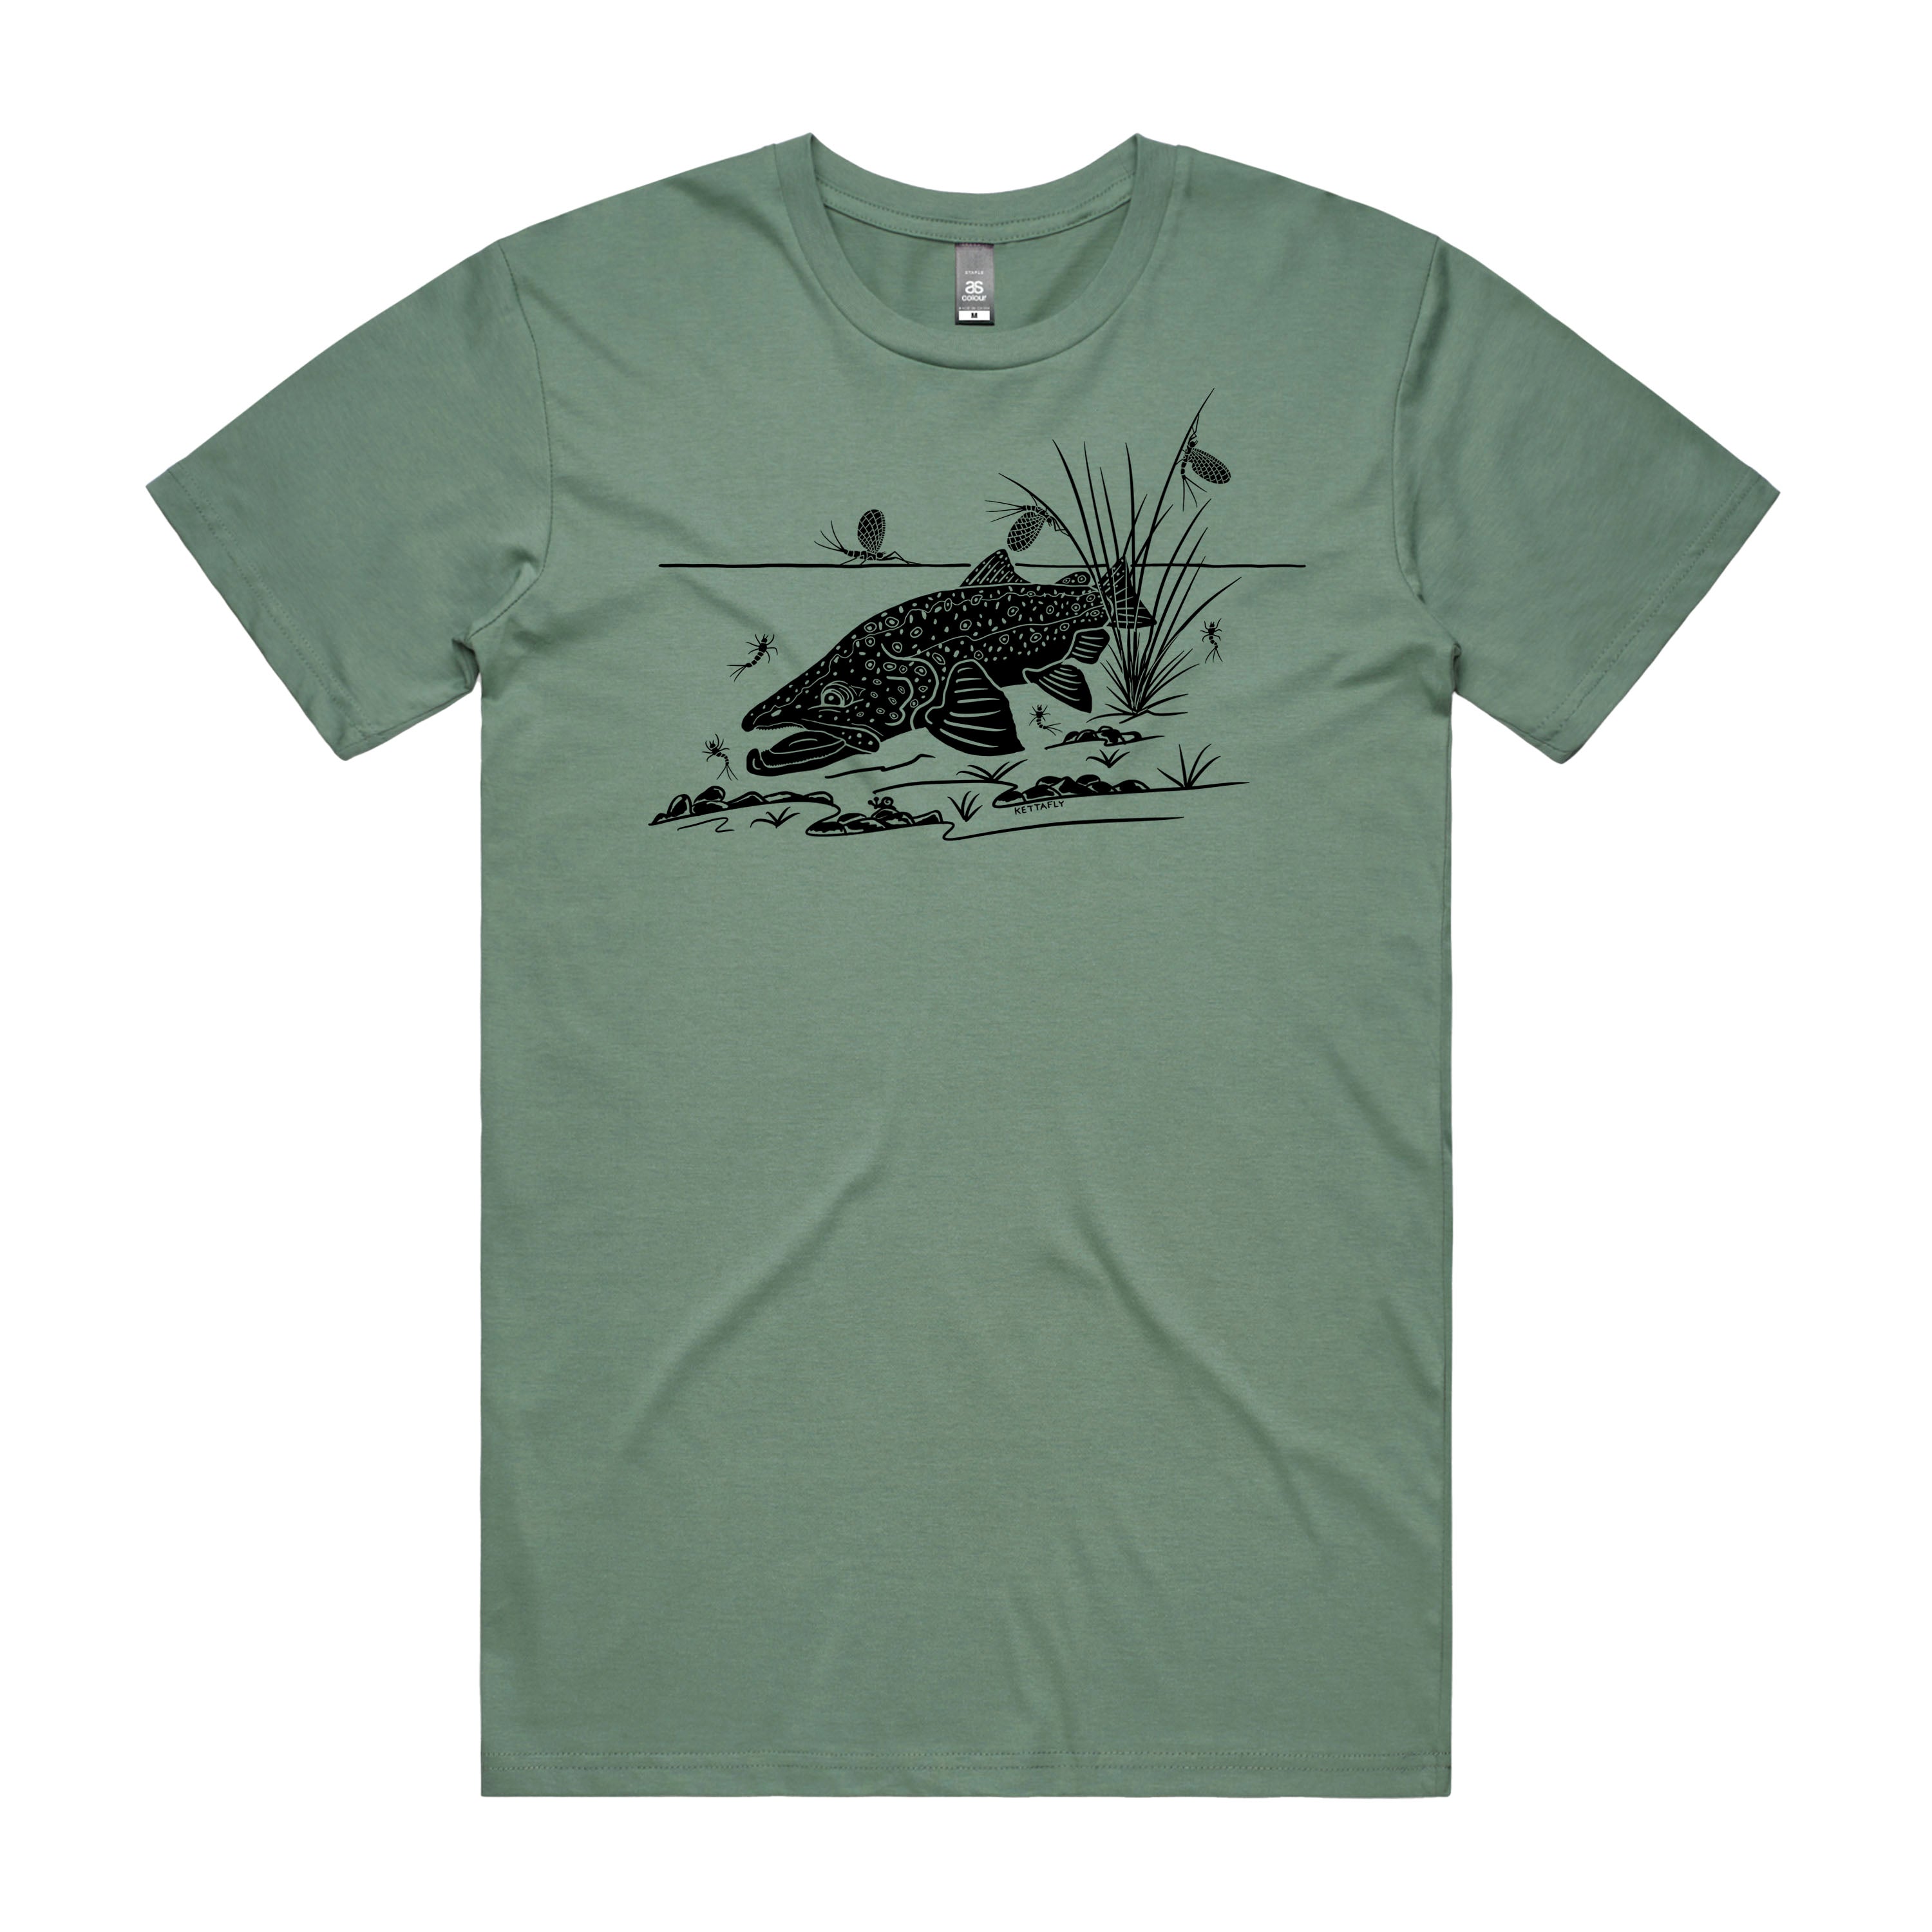 Brown Trout & Duns Design (front) T-Shirt Short Sleeve